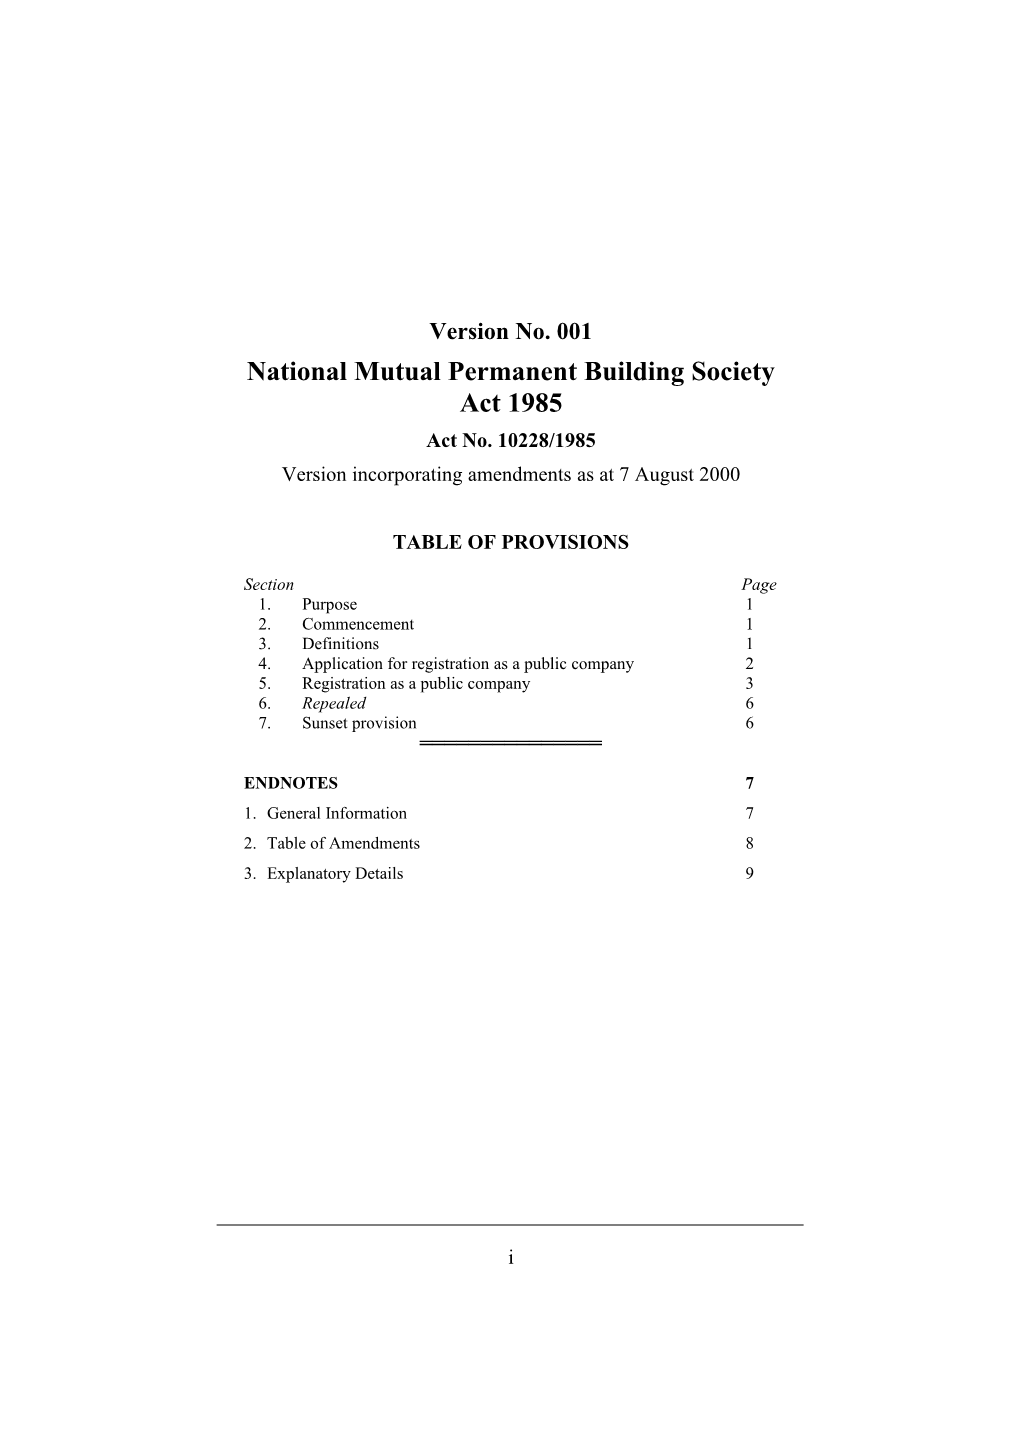 National Mutual Permanent Building Society Act 1985